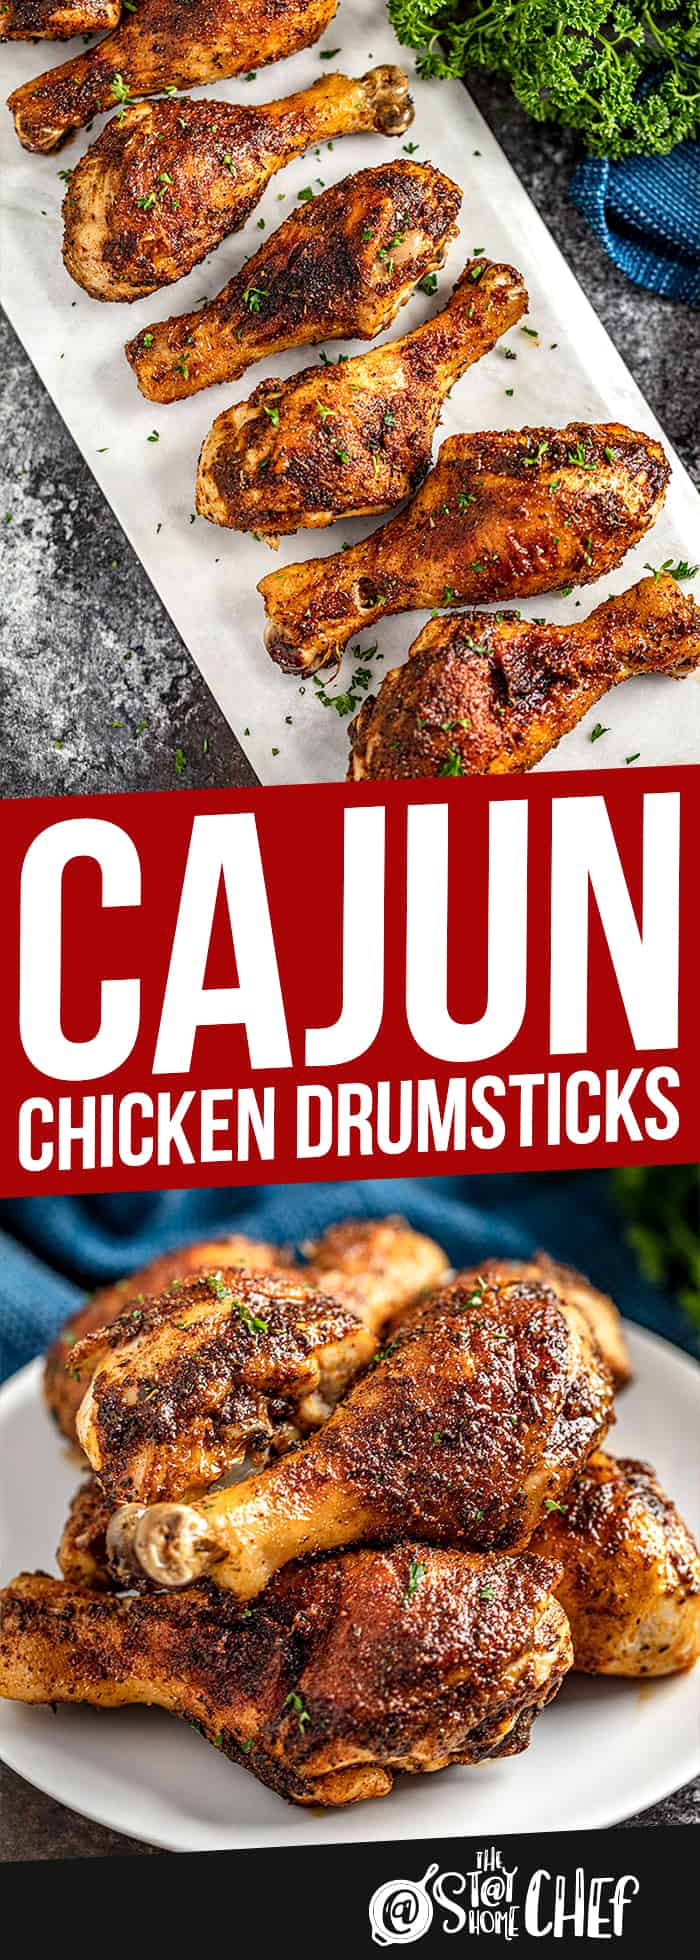 Cajun Chicken Drumsticks